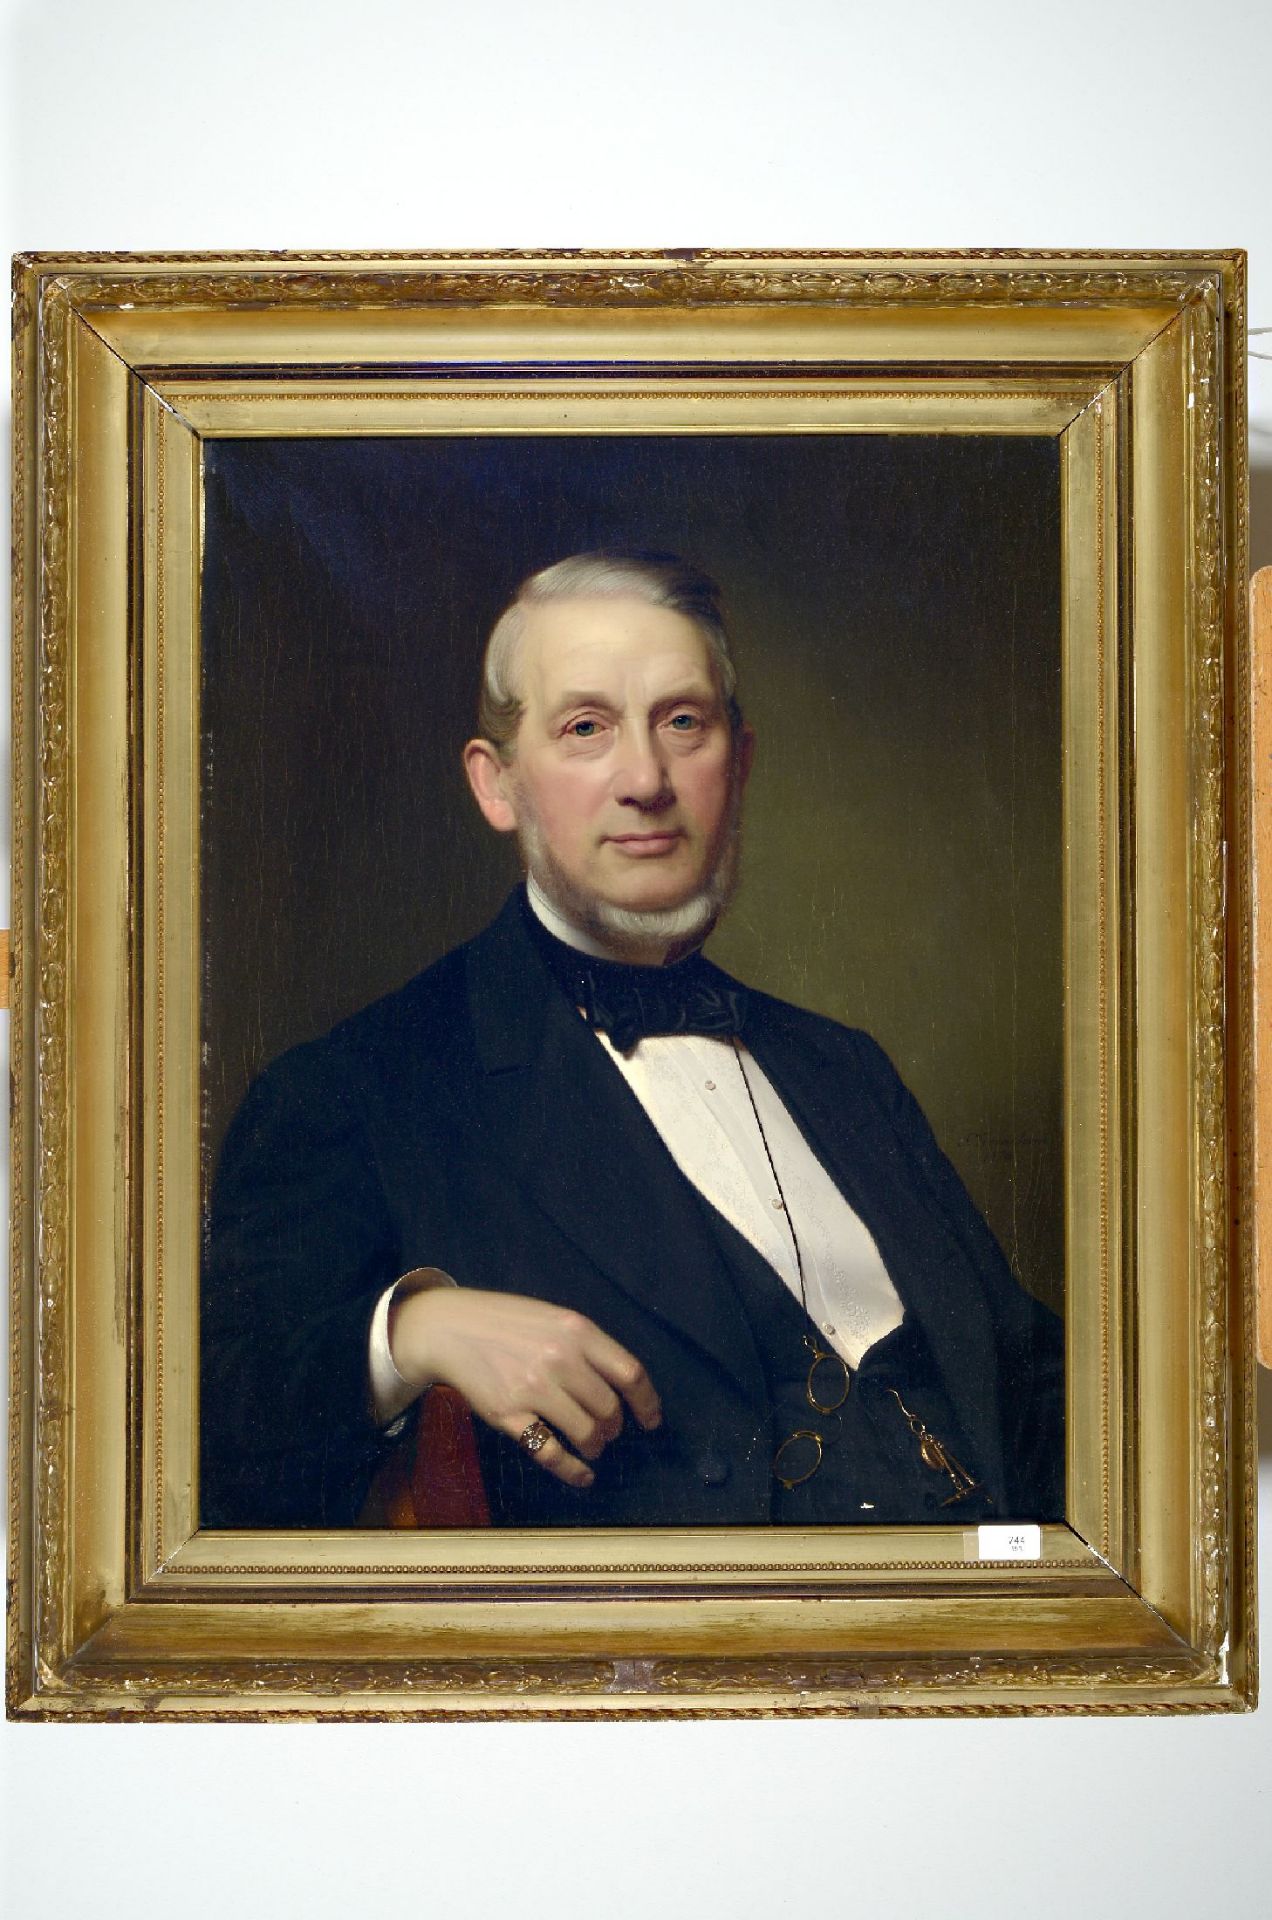 Johann Frederik Vermehren, 1823 Ringsted/ Seeland - 1910